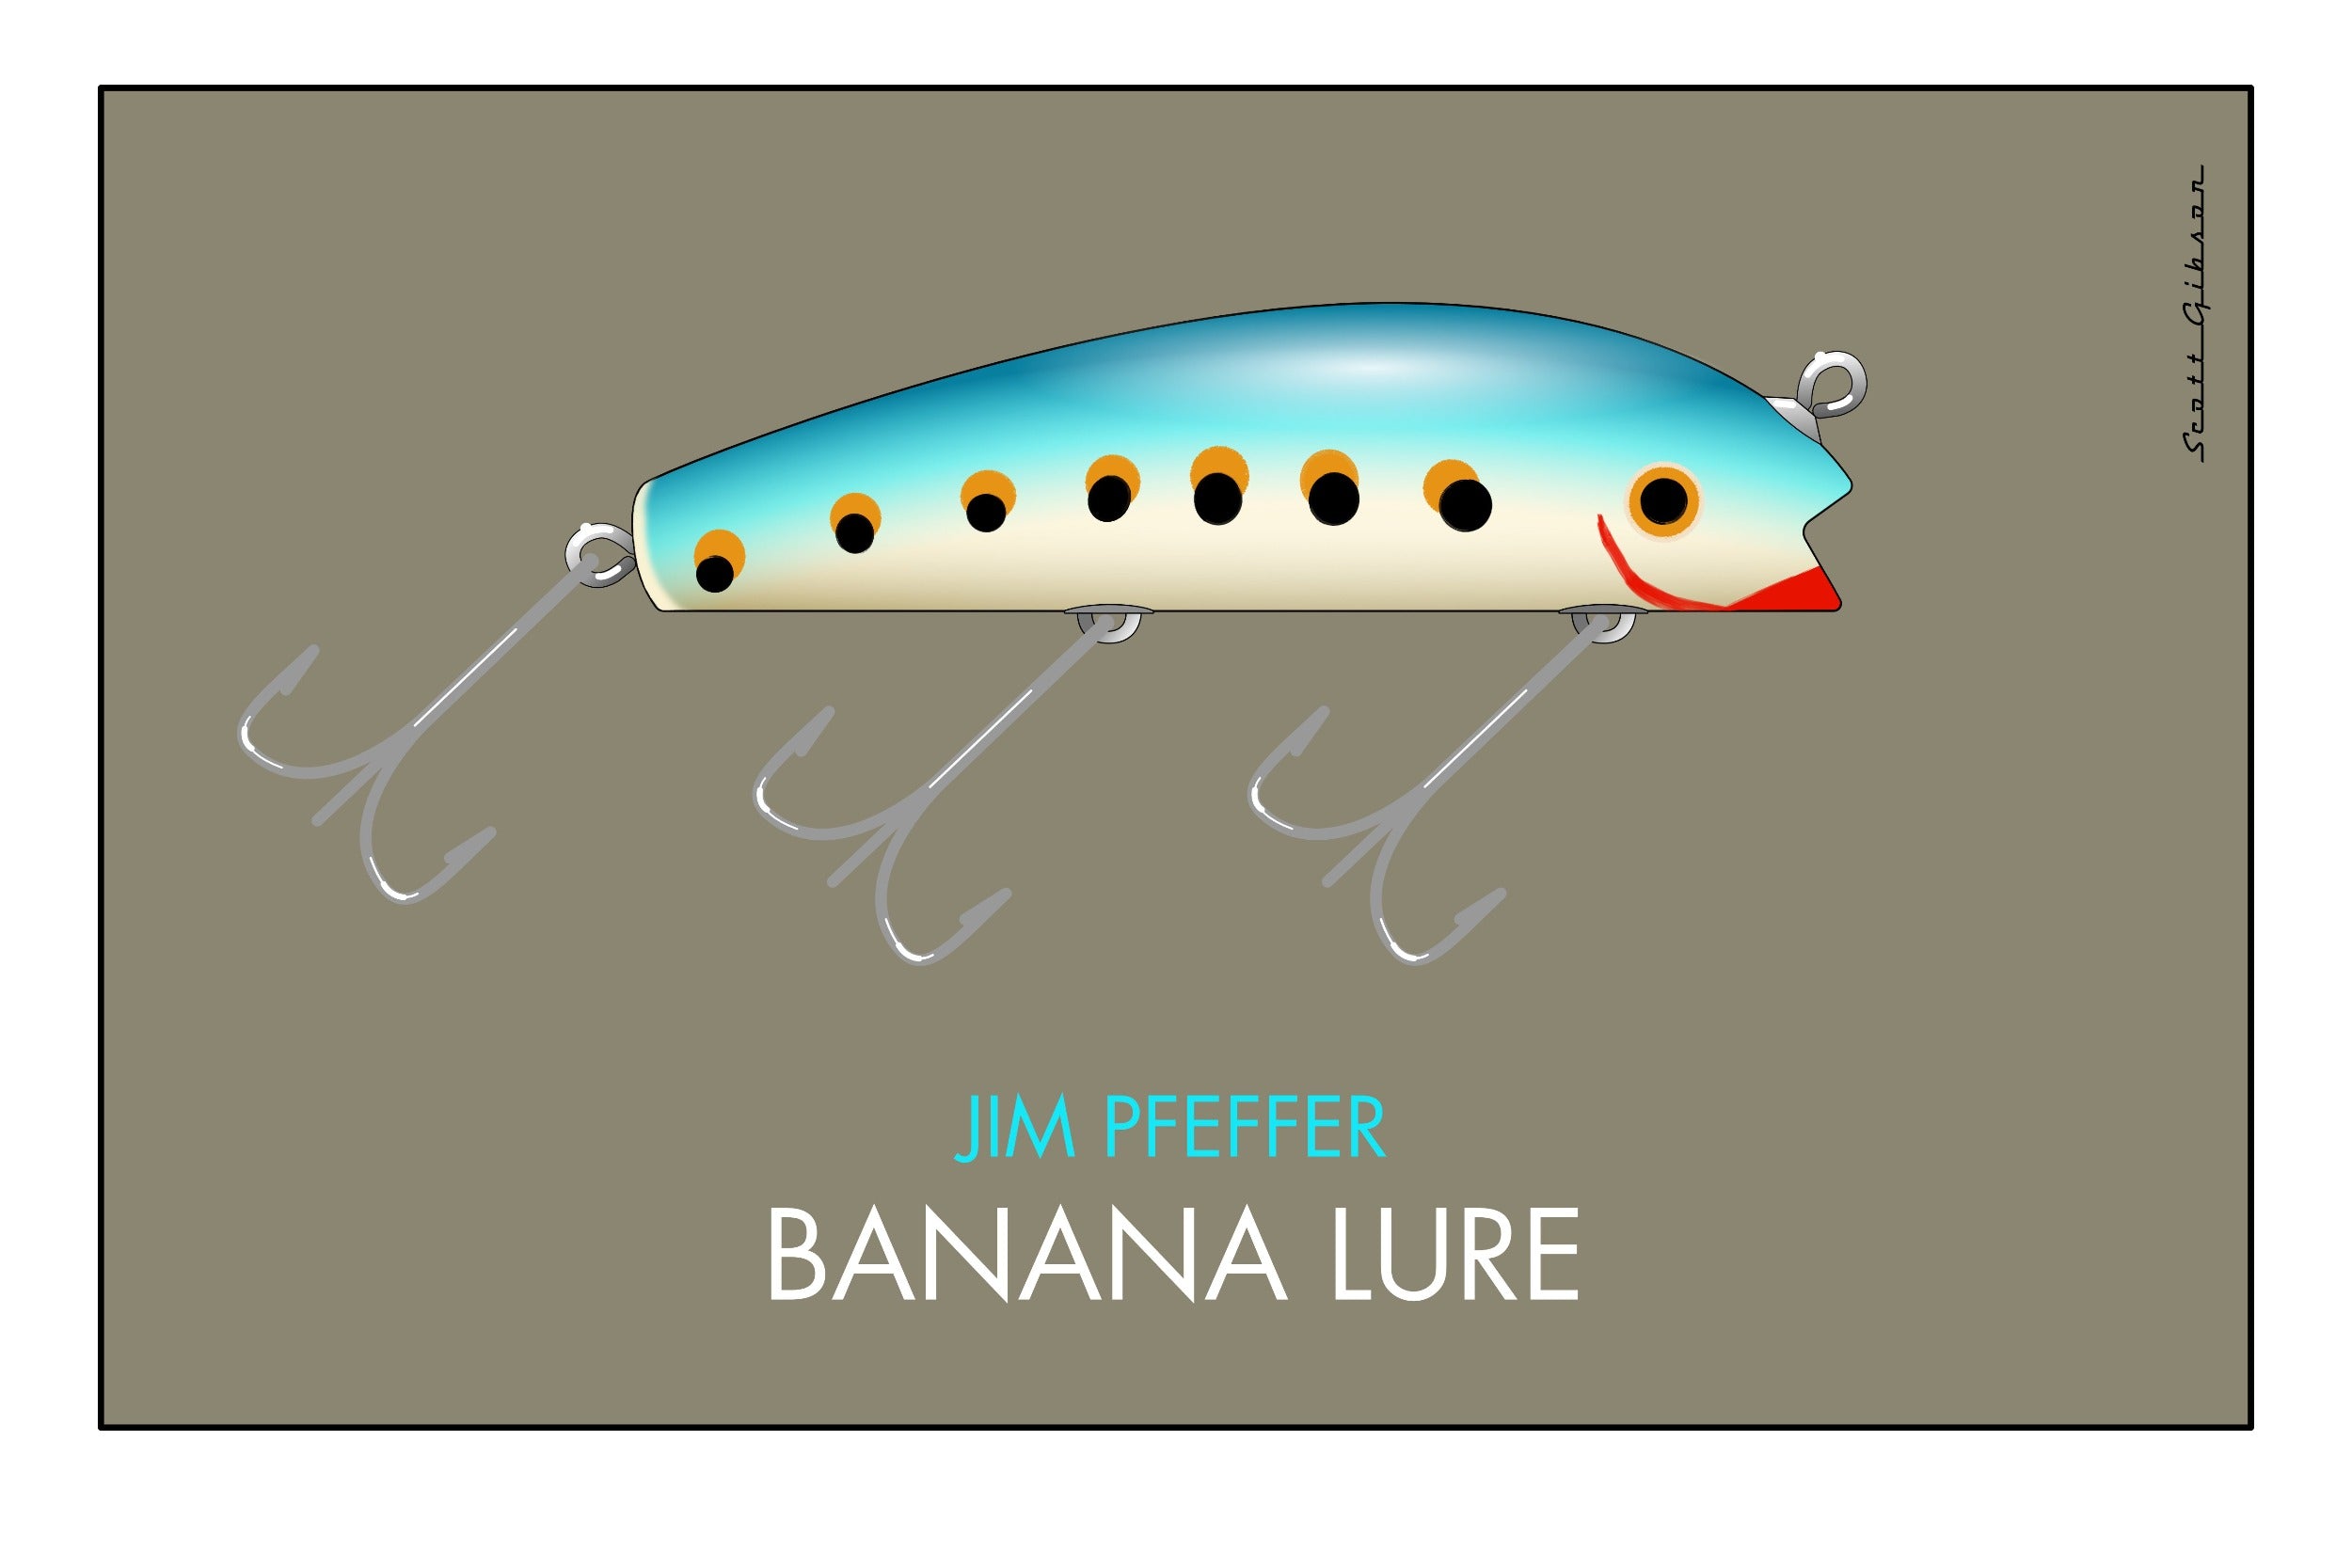 Pflueger Monarch Minnow, Fishing Lure Art, lureclassics.com – Lure  Classics